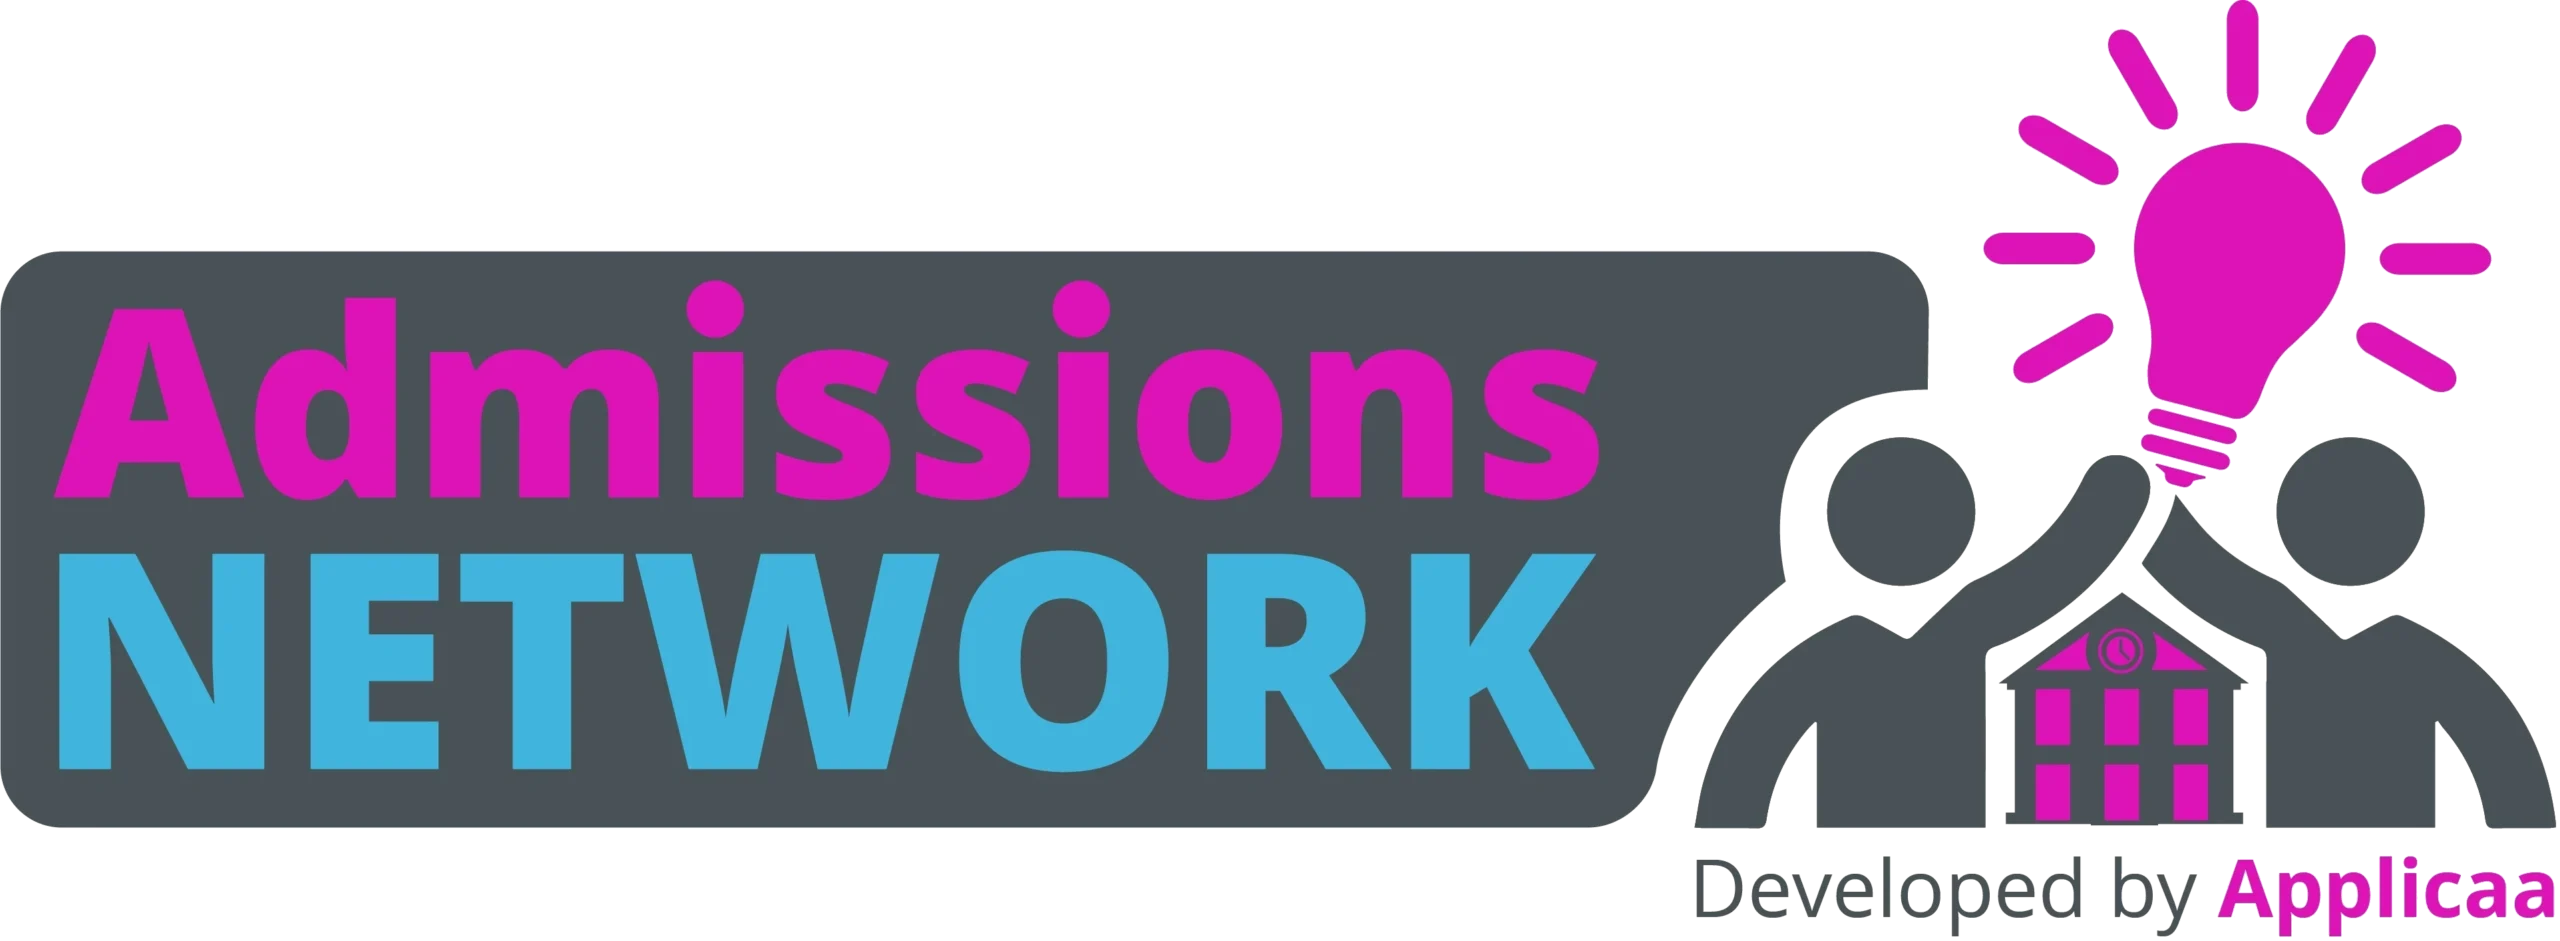 admissions network logo